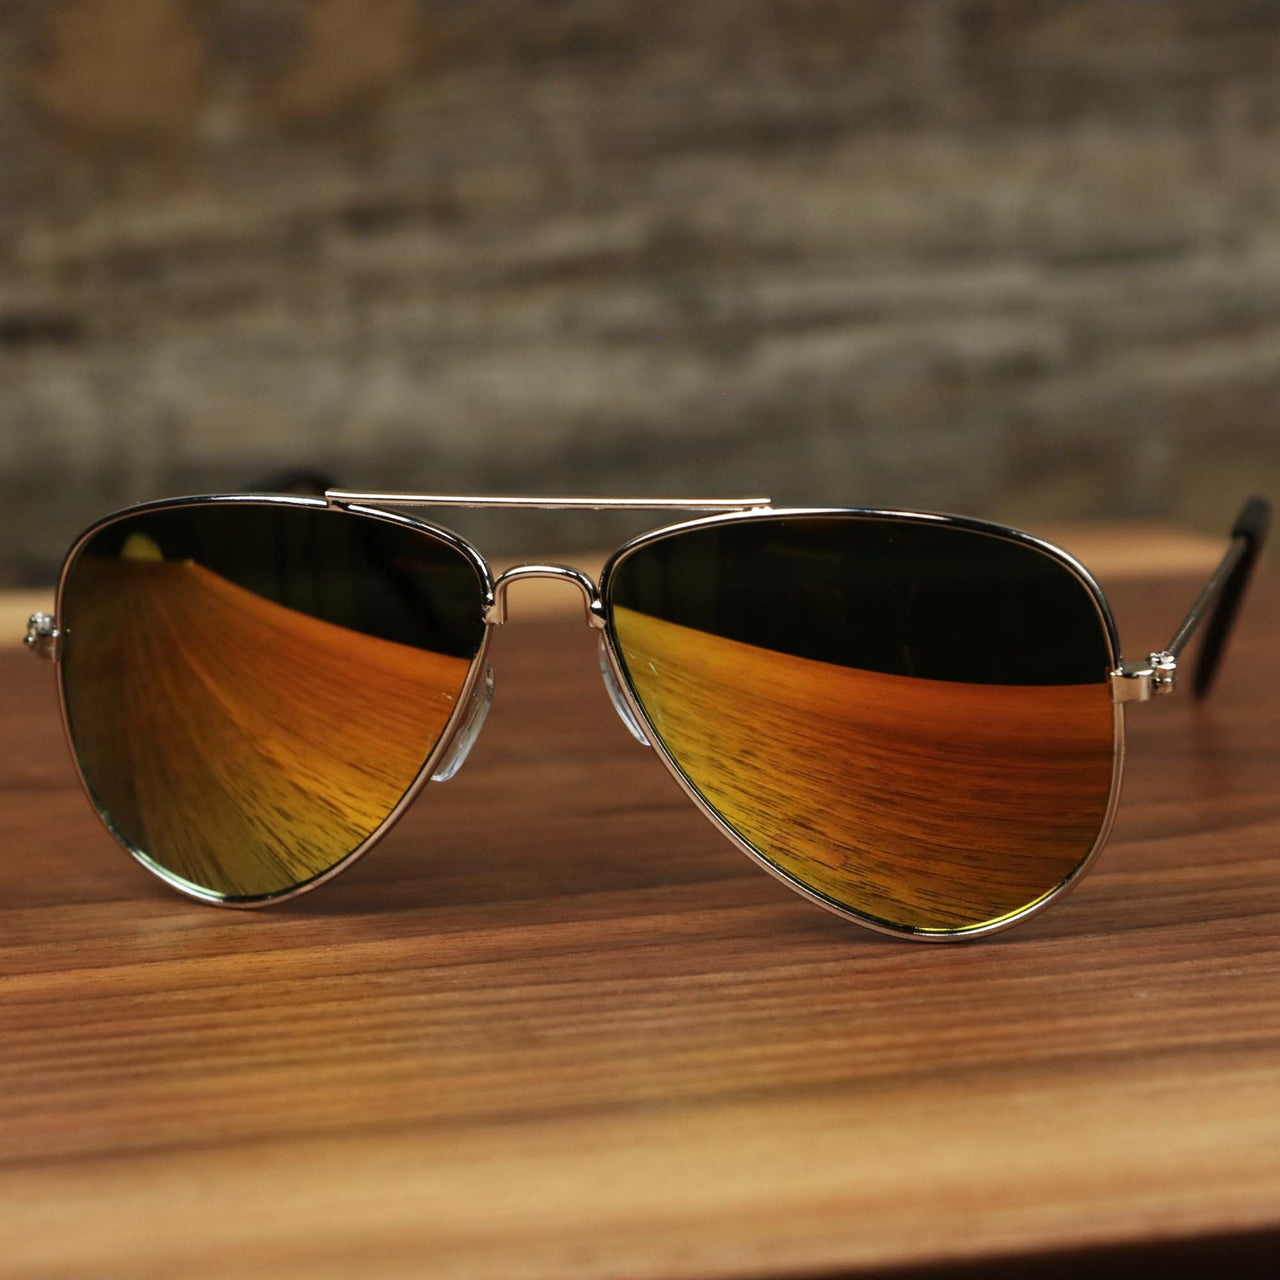 The Kid’s Aviator Frame Orange Lens Sunglasses with Silver Frame